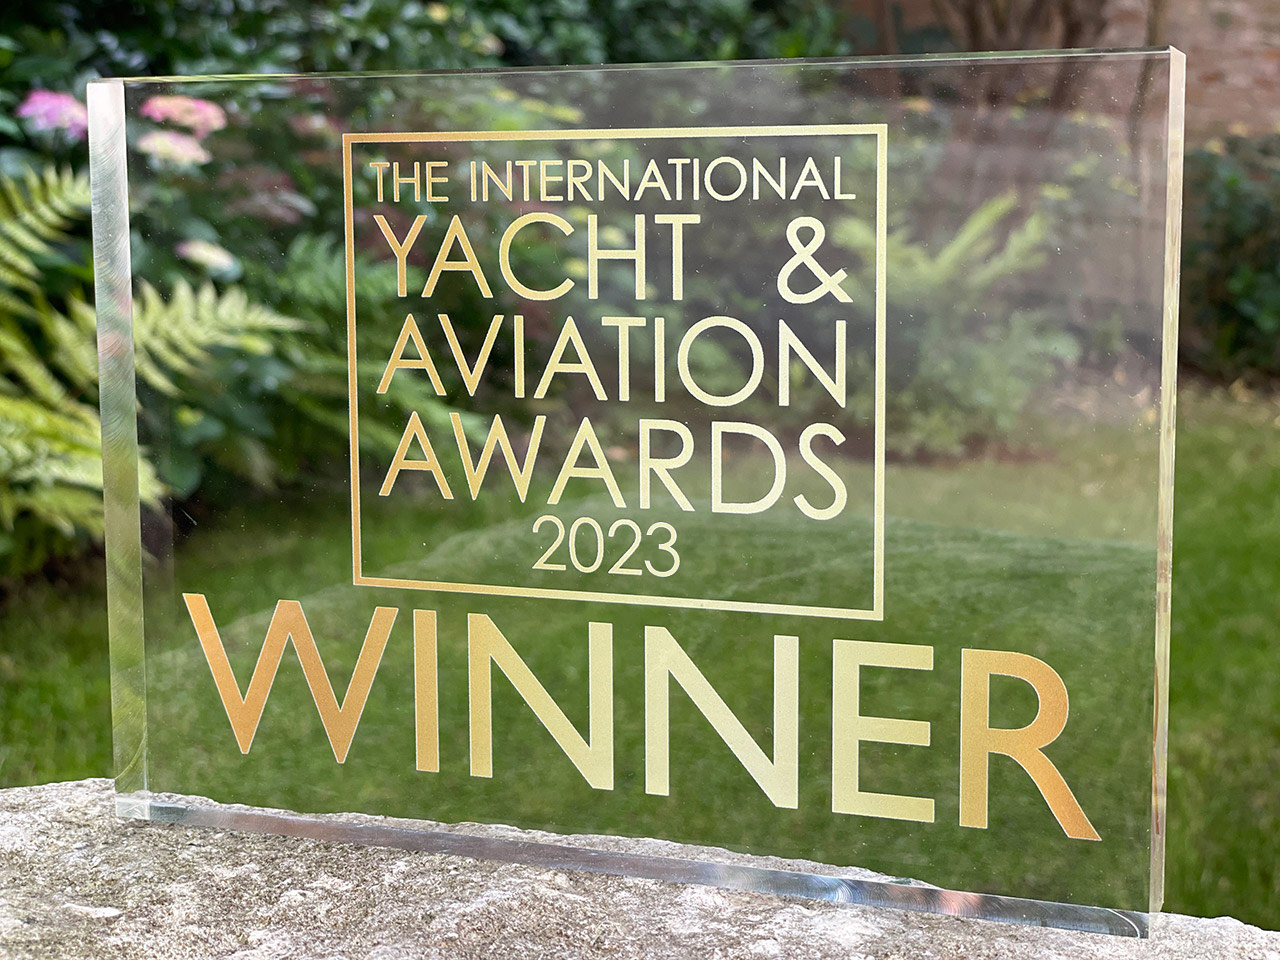 The International Yacht & Aviation Awards 2023 Winner